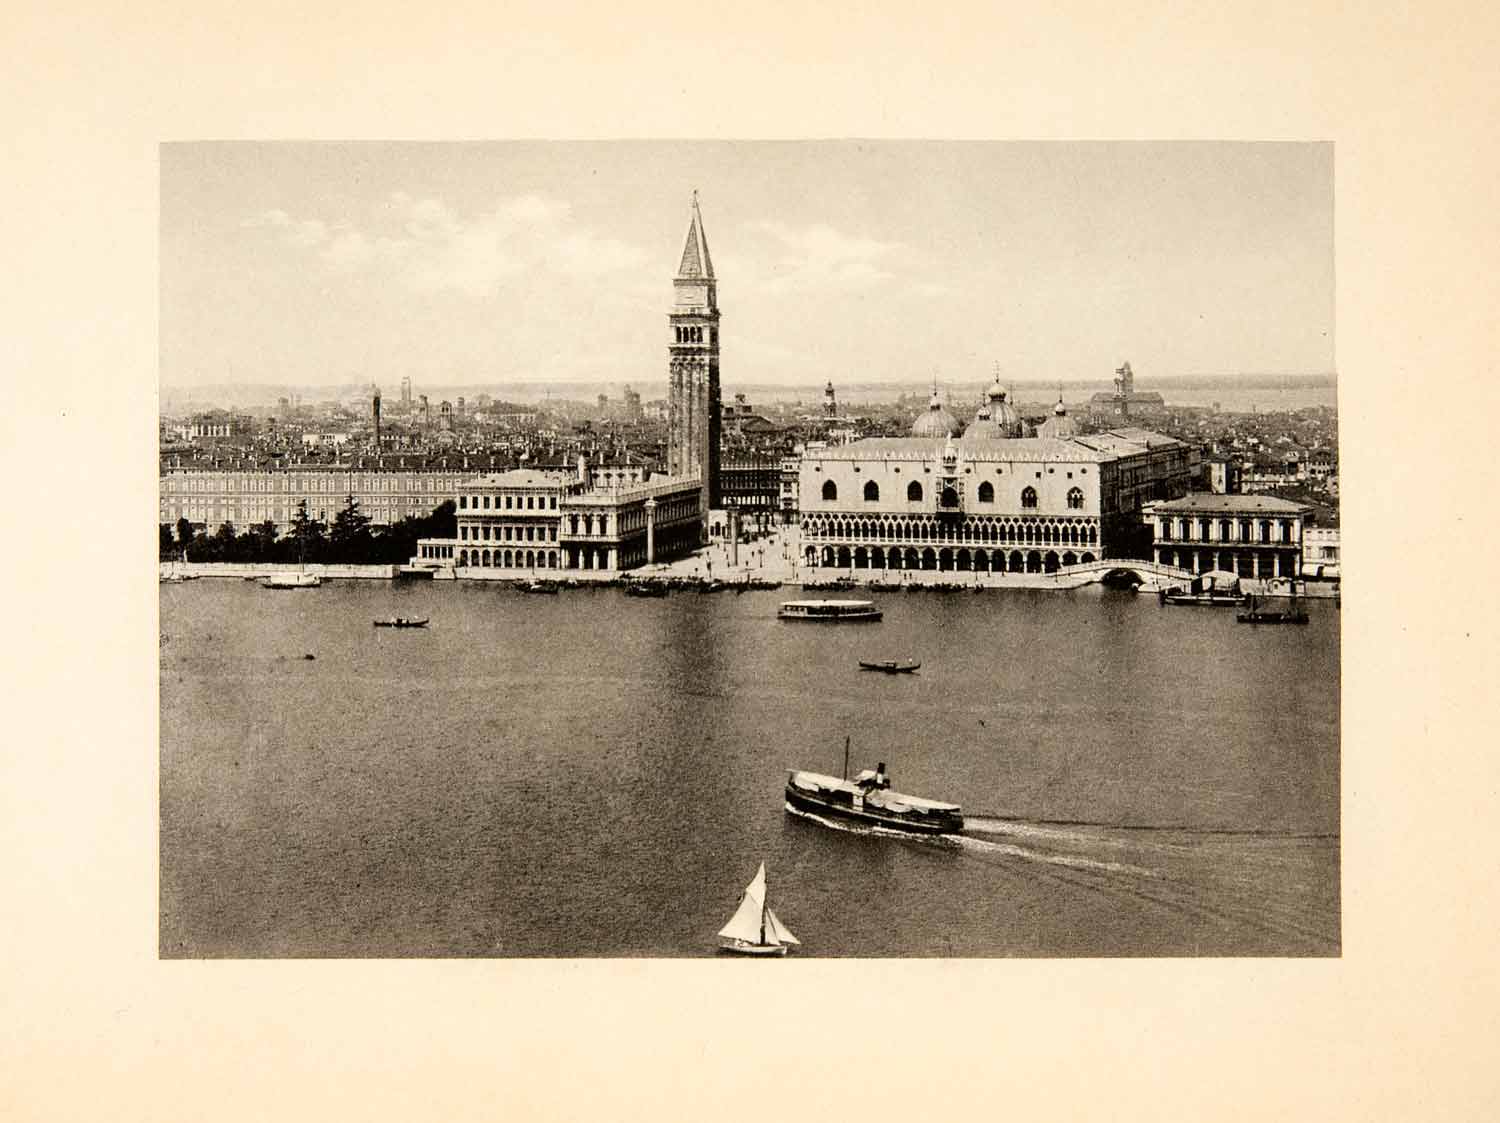 1902 Photogravure Venice Italy Saint Mark Square Piazza Doge Palace Canal XGDB6